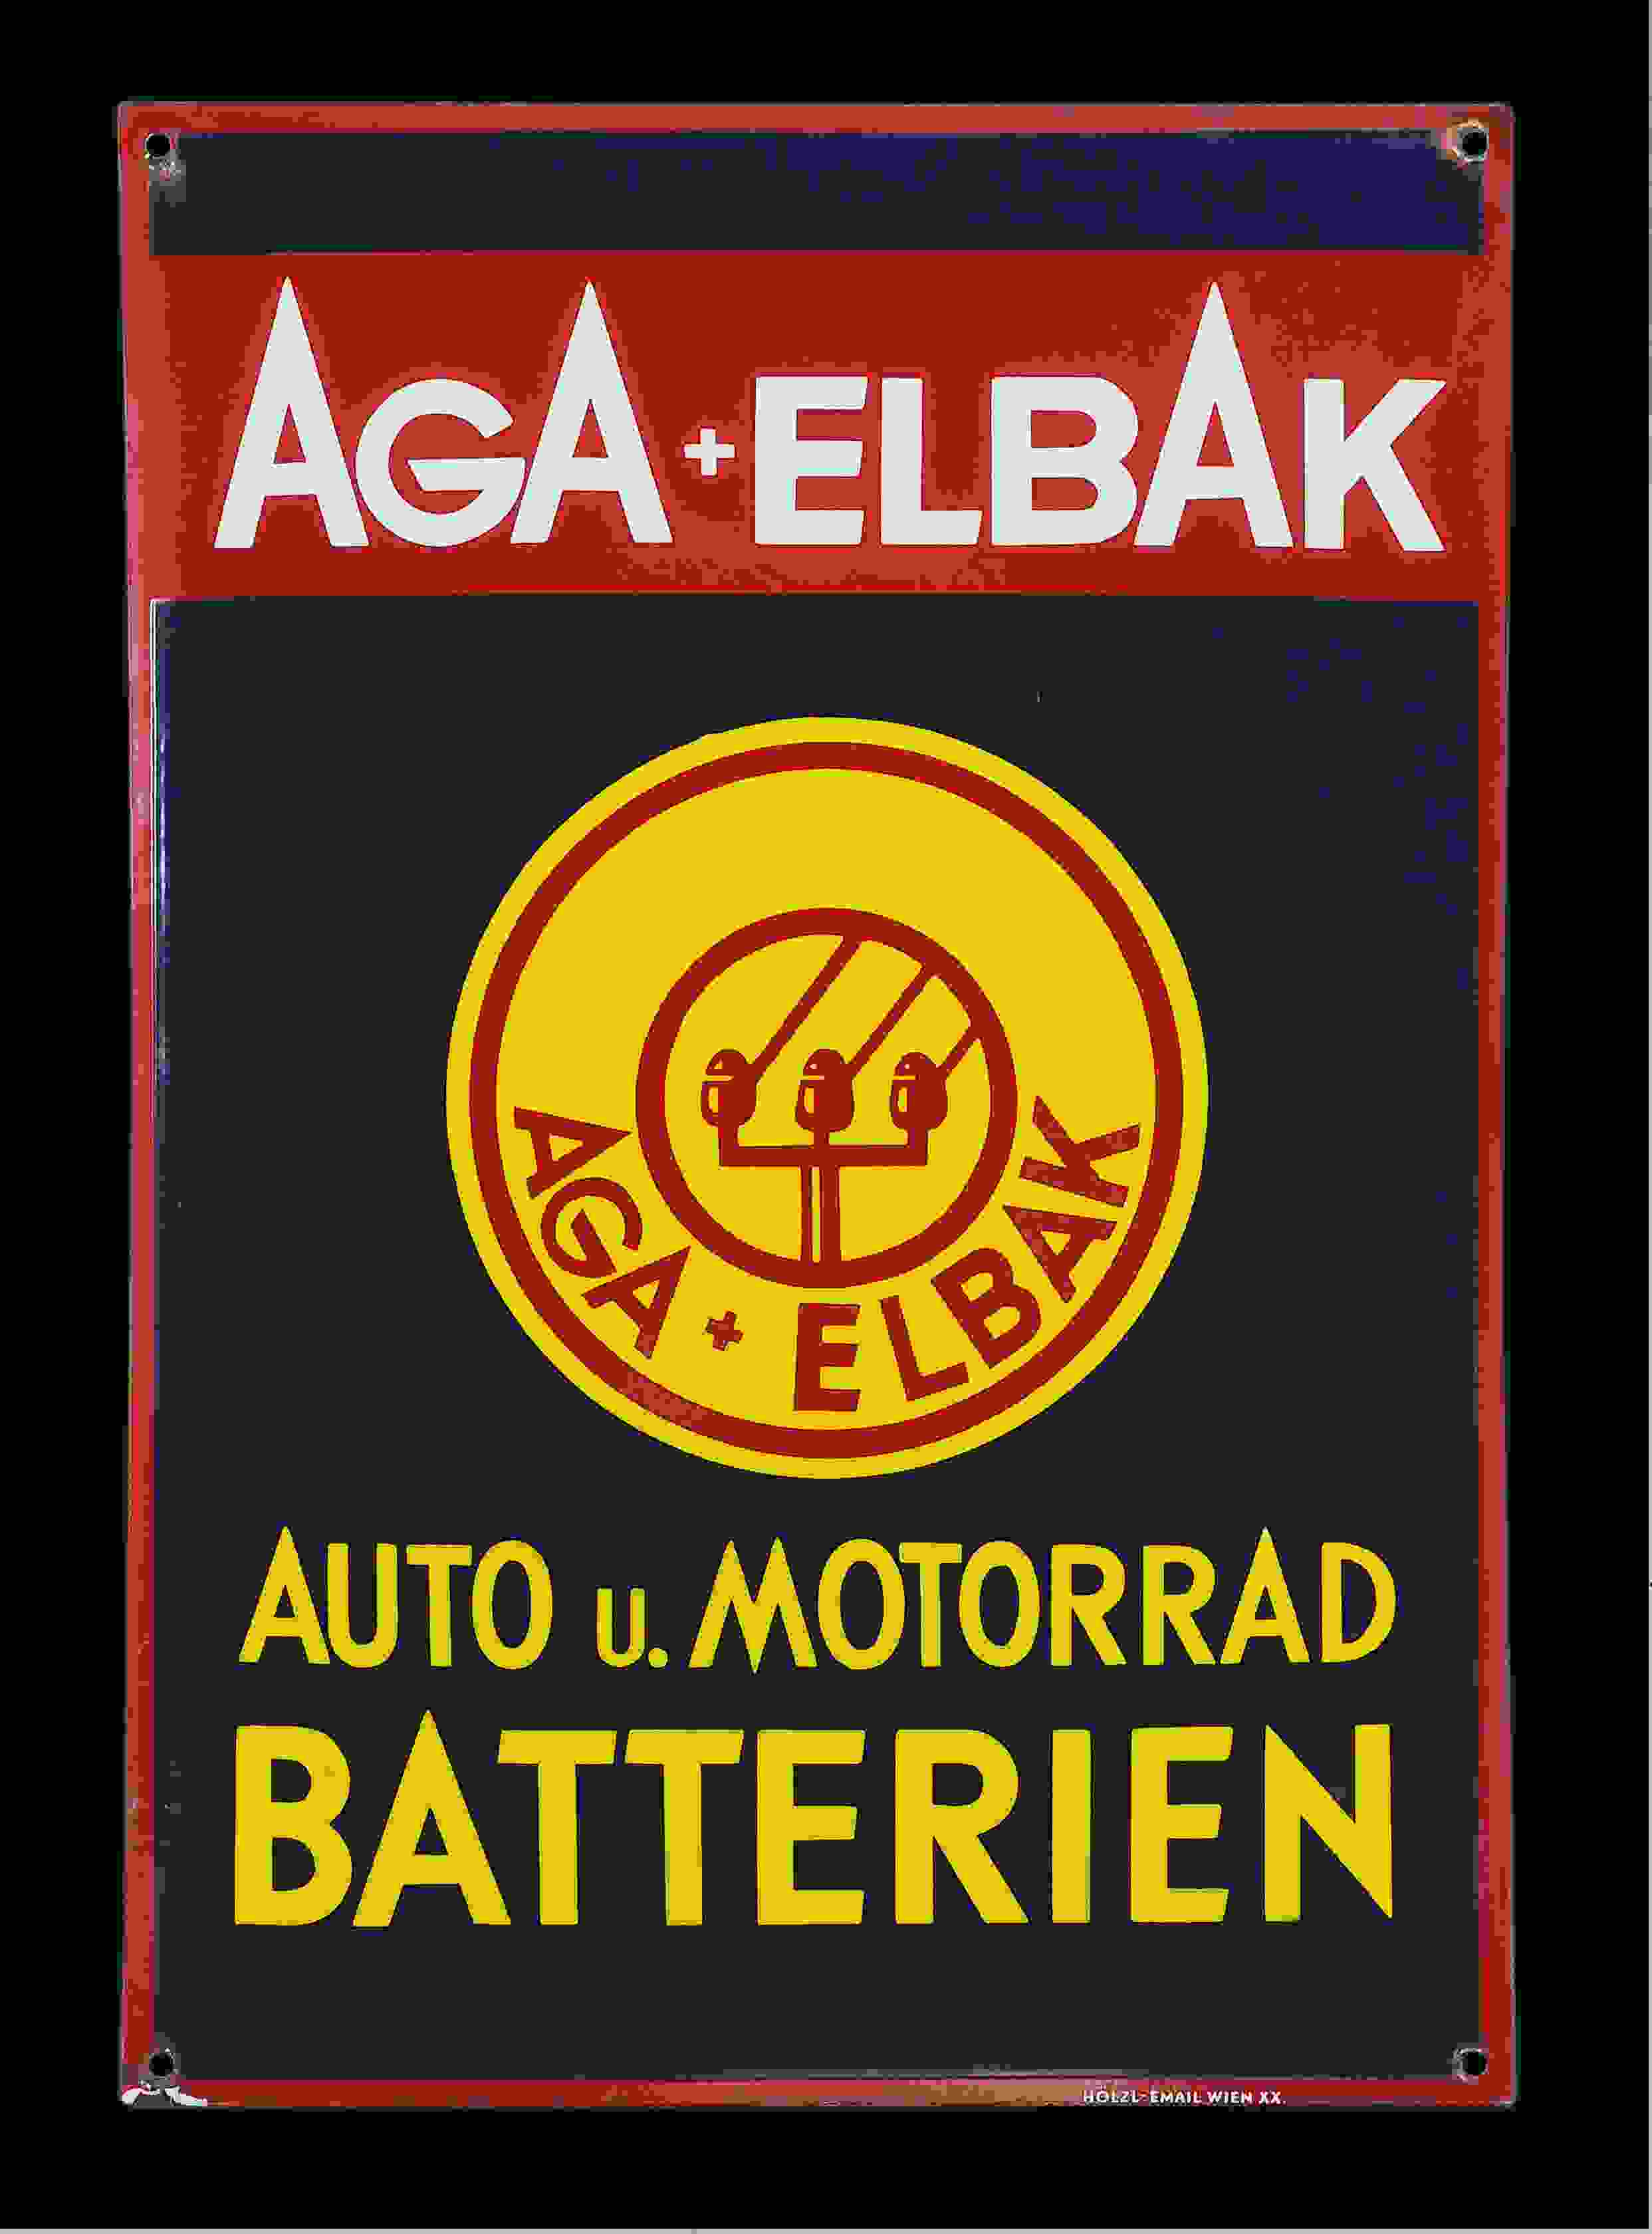 Aga + Elbak Batterien 